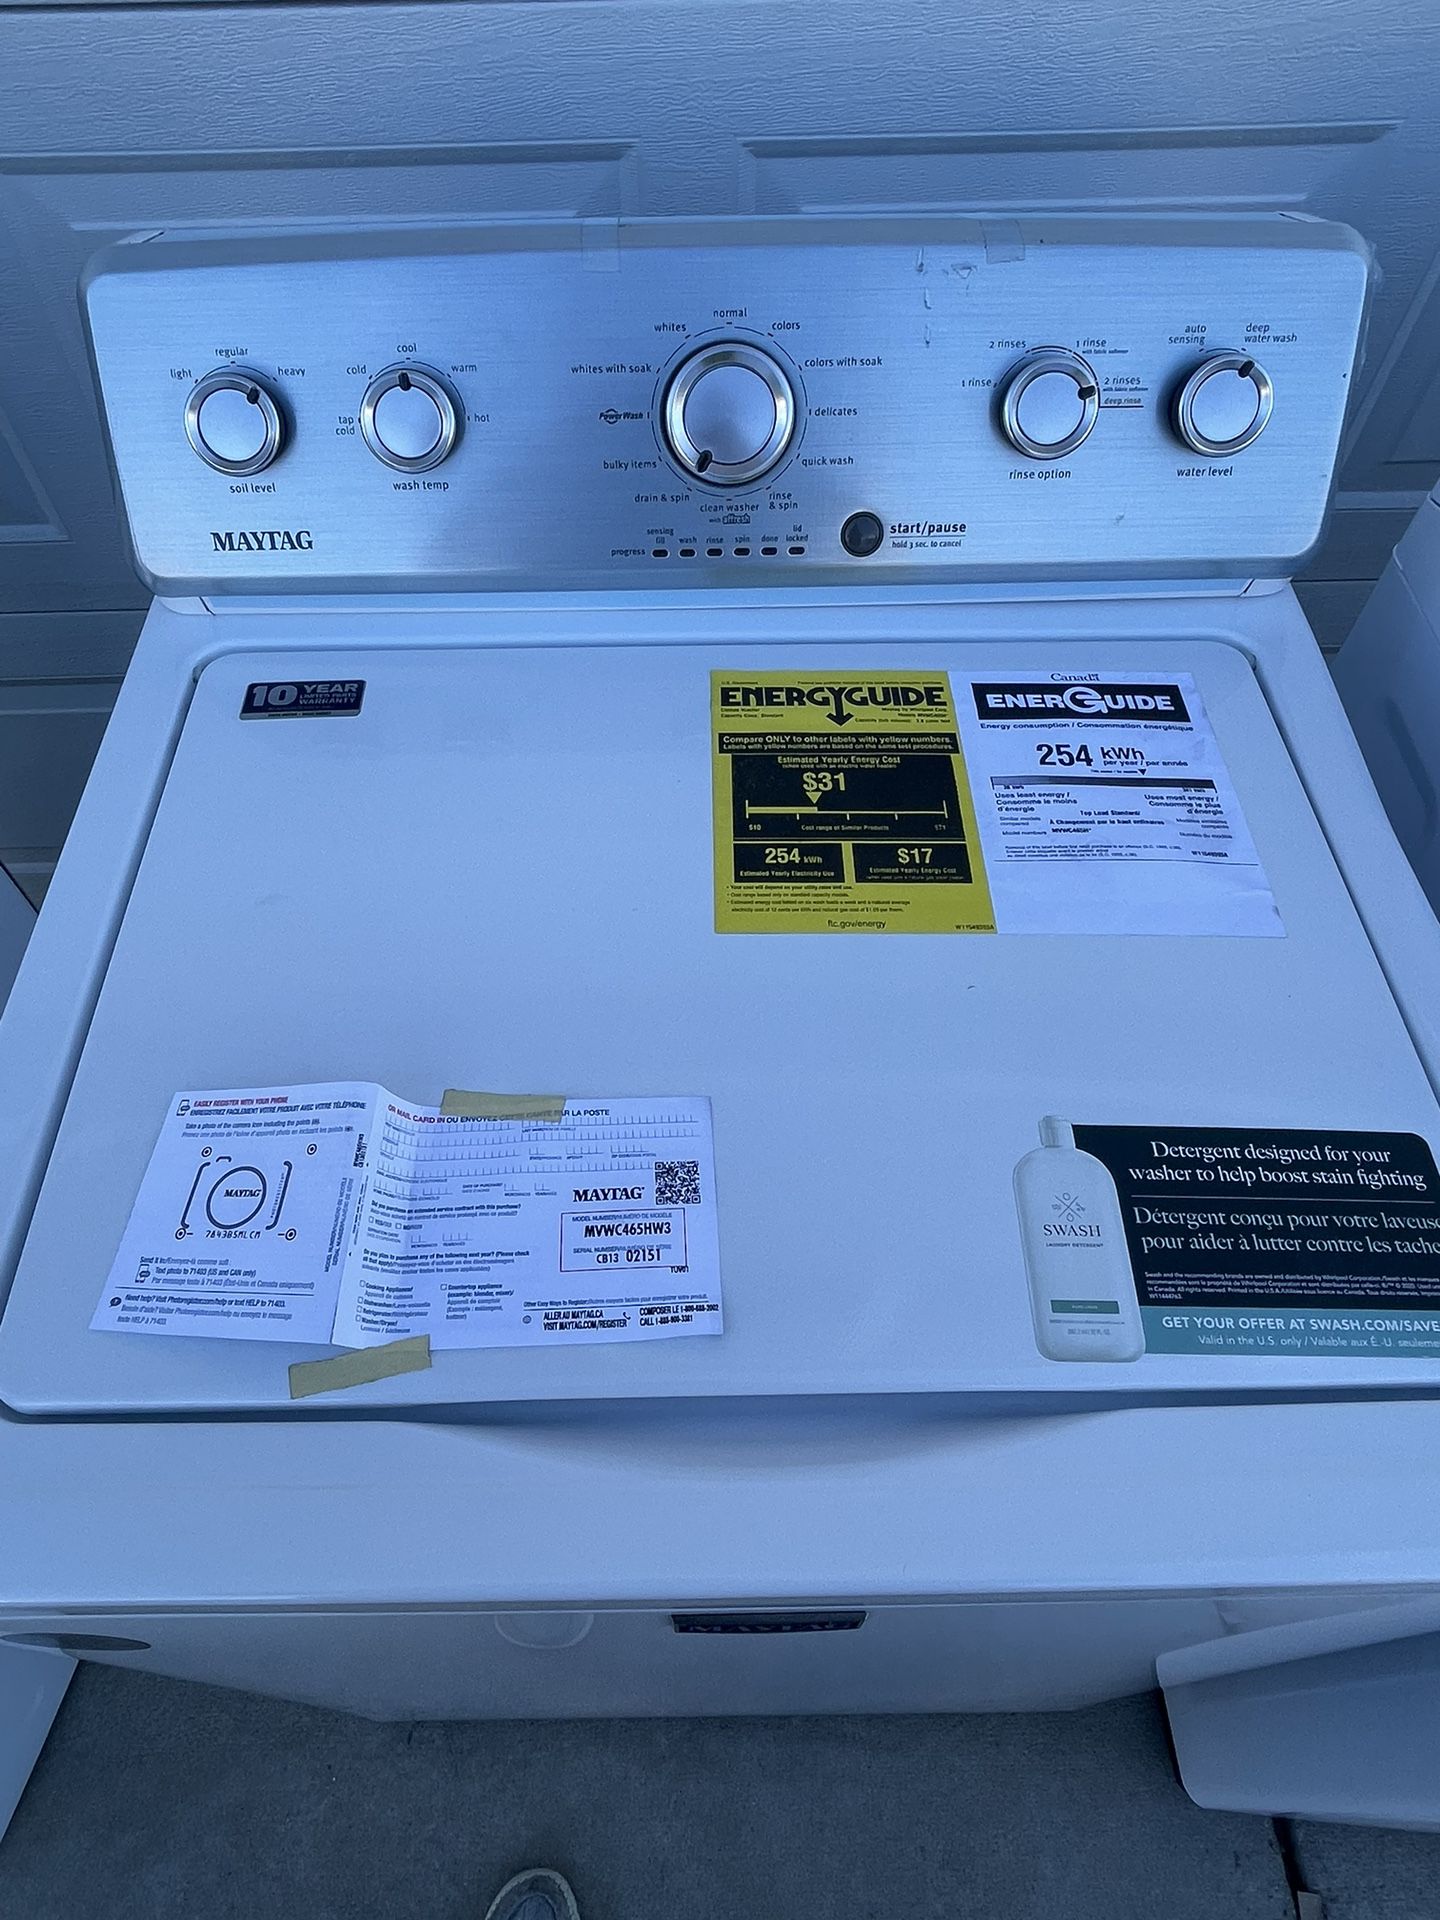 *NEW* Maytag 3.8 cu. ft. High Efficiency Top Load Washing Machine